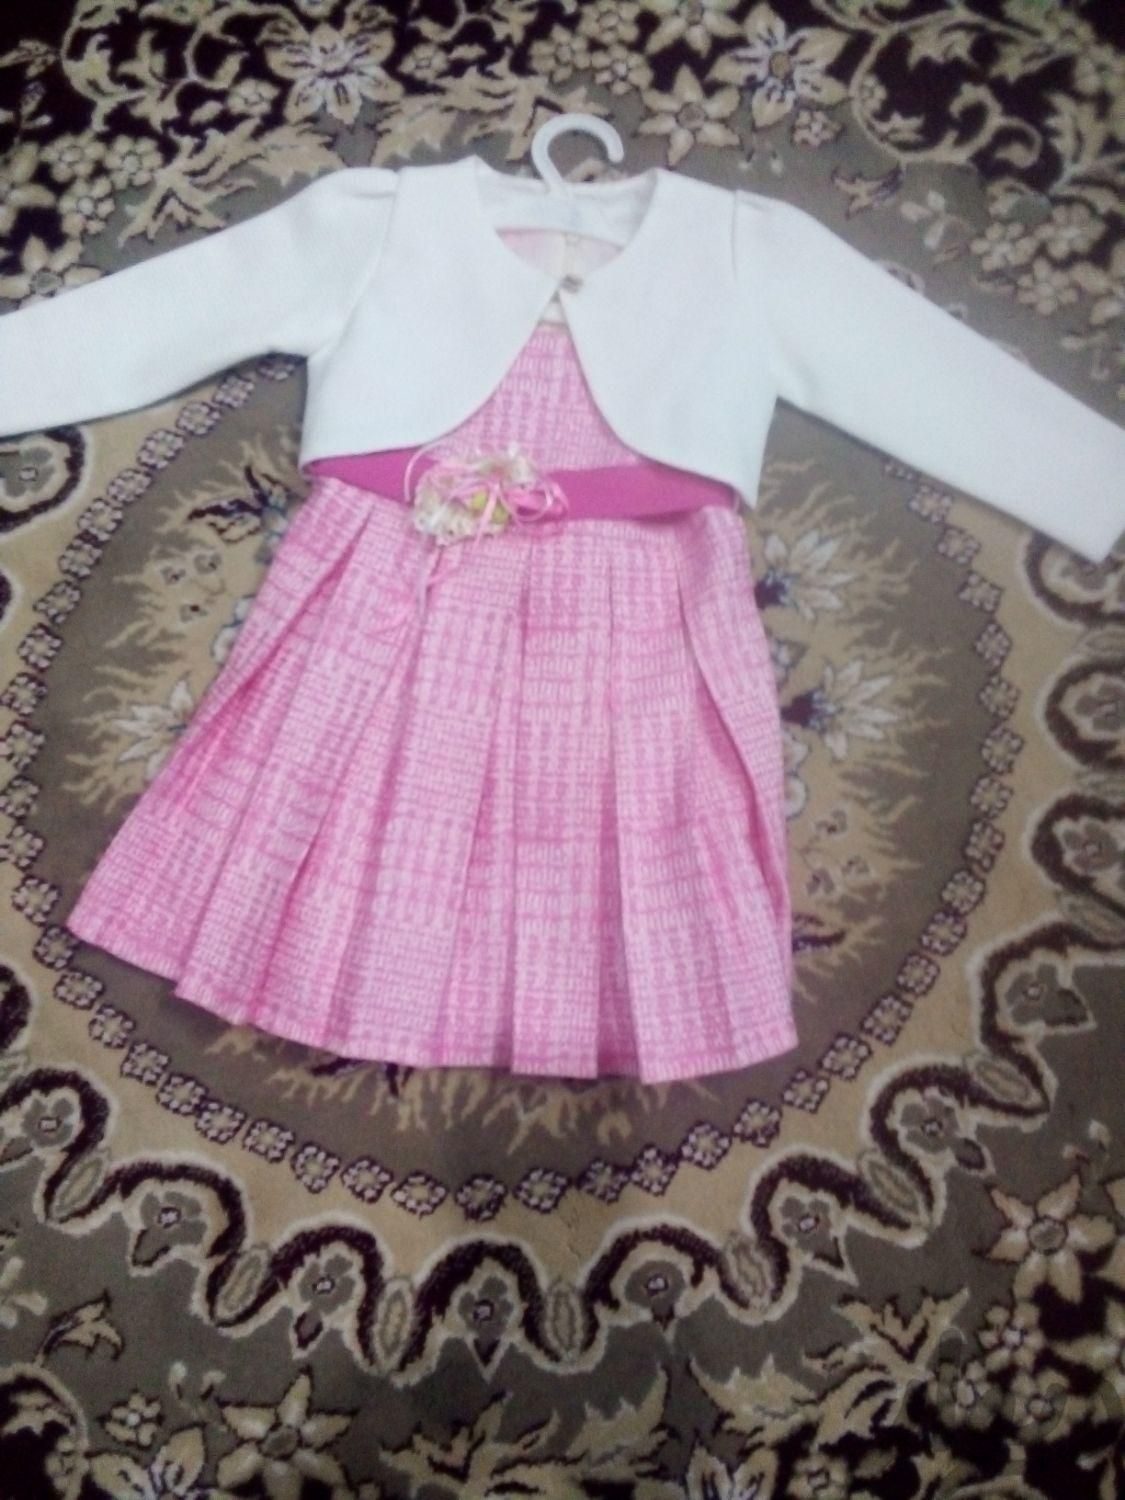 پیراهن مجلسی دخترانه|کفش و لباس بچه|ساوه, |دیوار